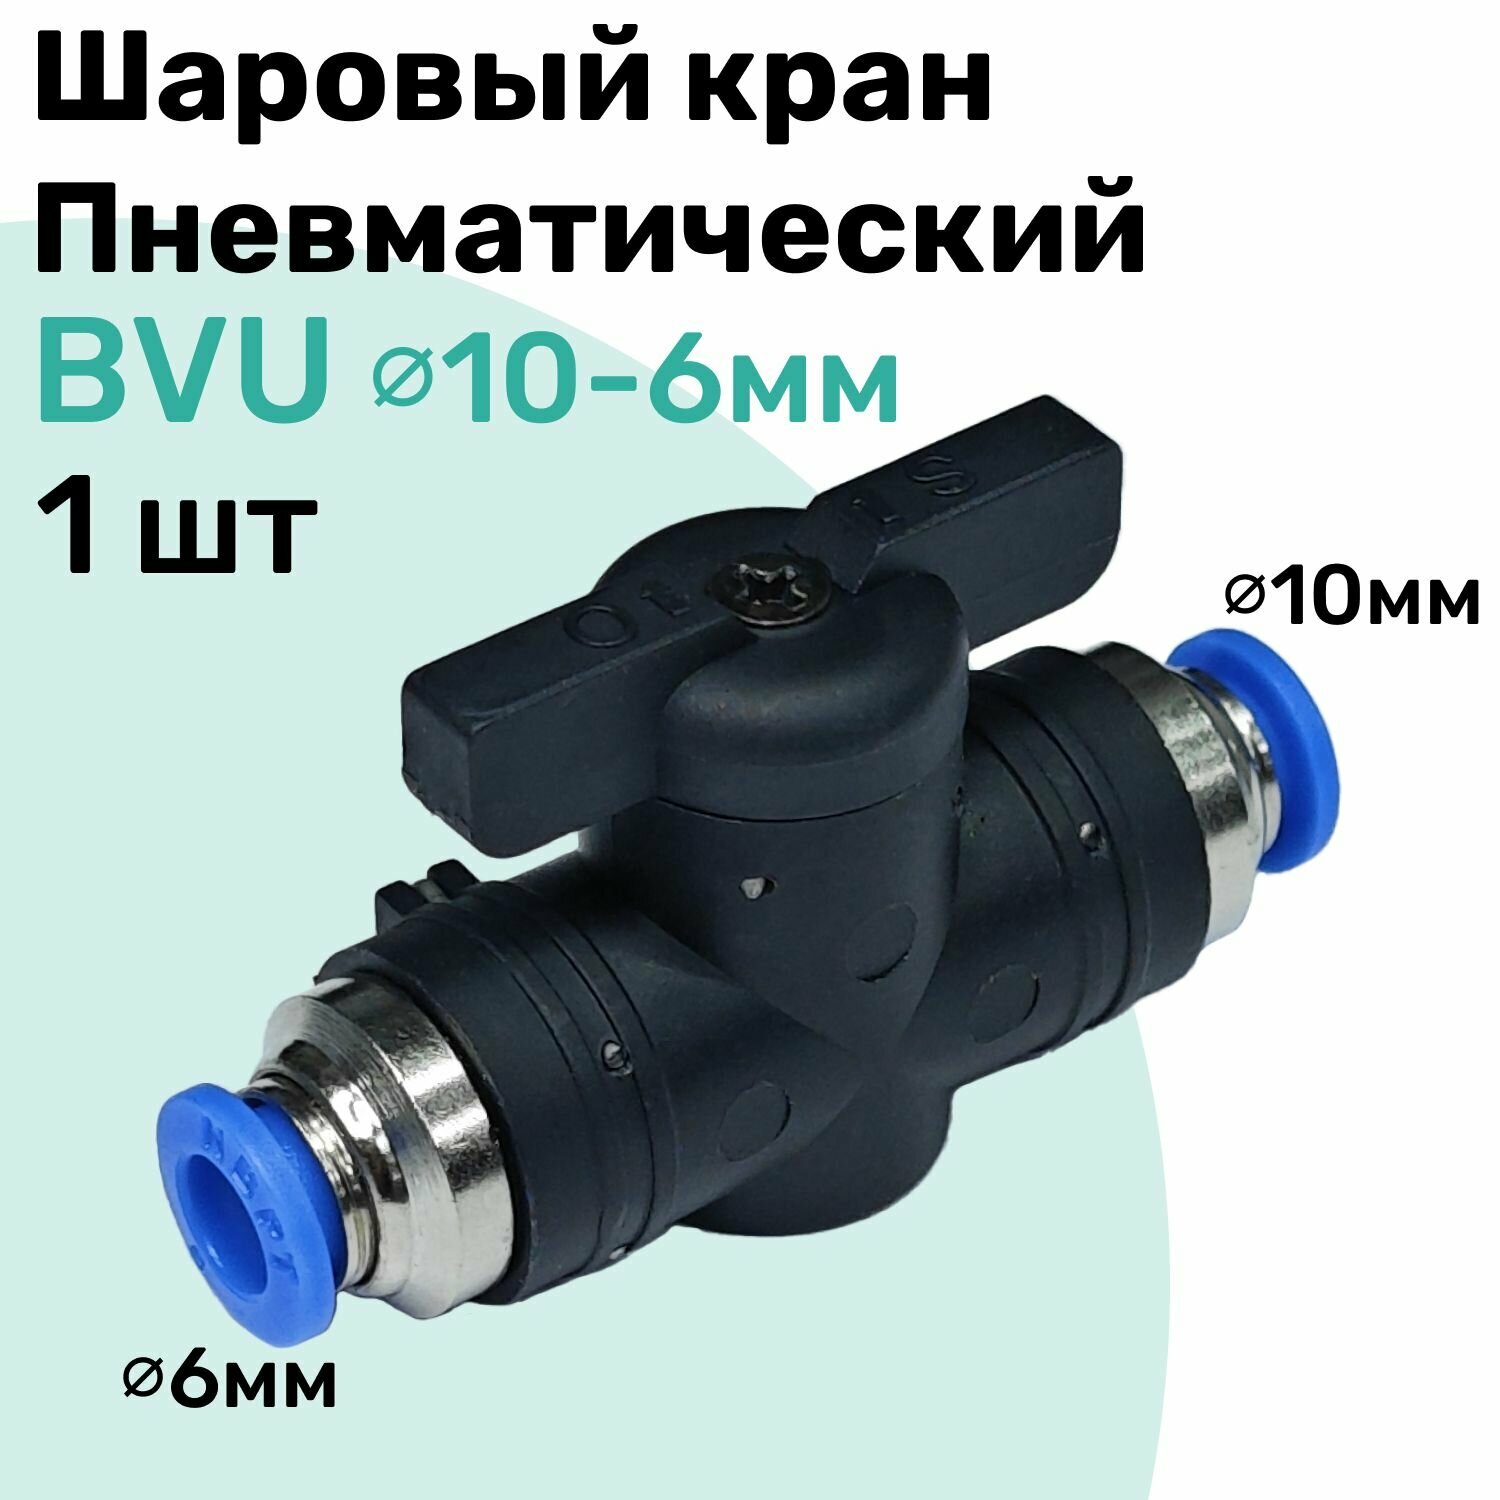 Шаровый кран пневматический BVU 10-6 мм, Пневмофитинг NBPT